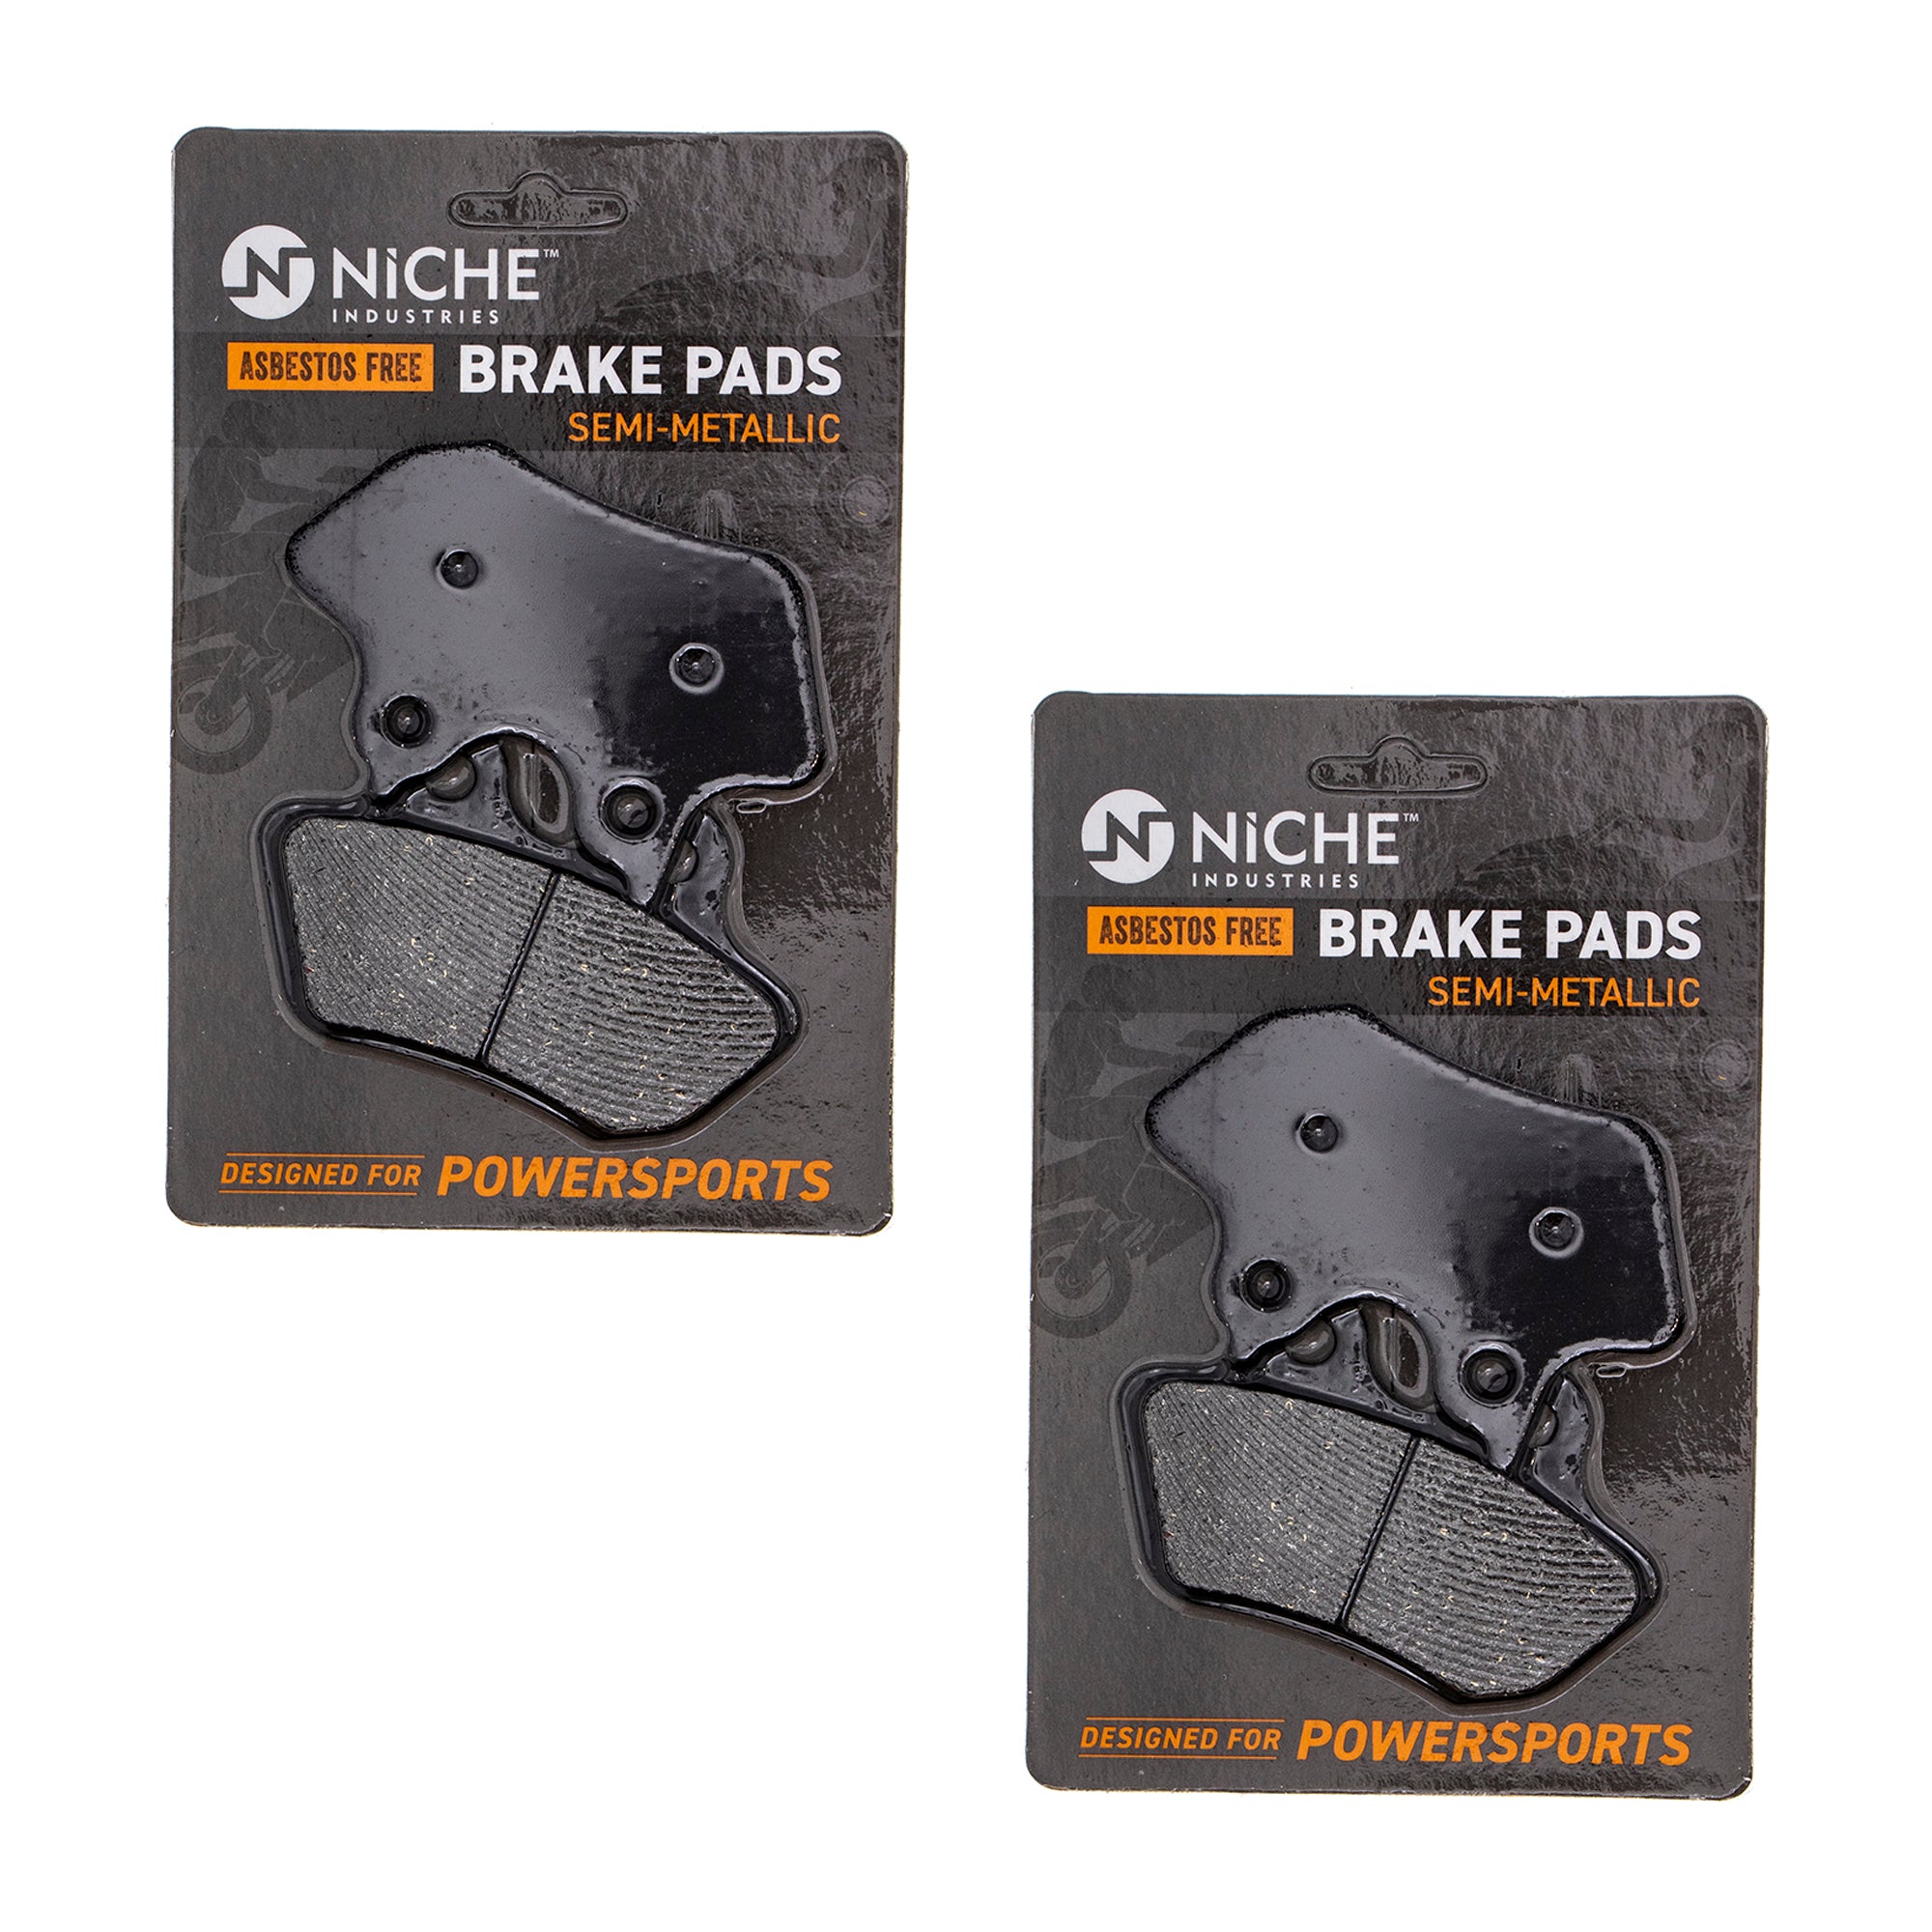 Semi-Metallic Brake Pad Set (Front & Rear) 2-Pack for Harley Davidson V-Rod Street NICHE 519-KPA2386D